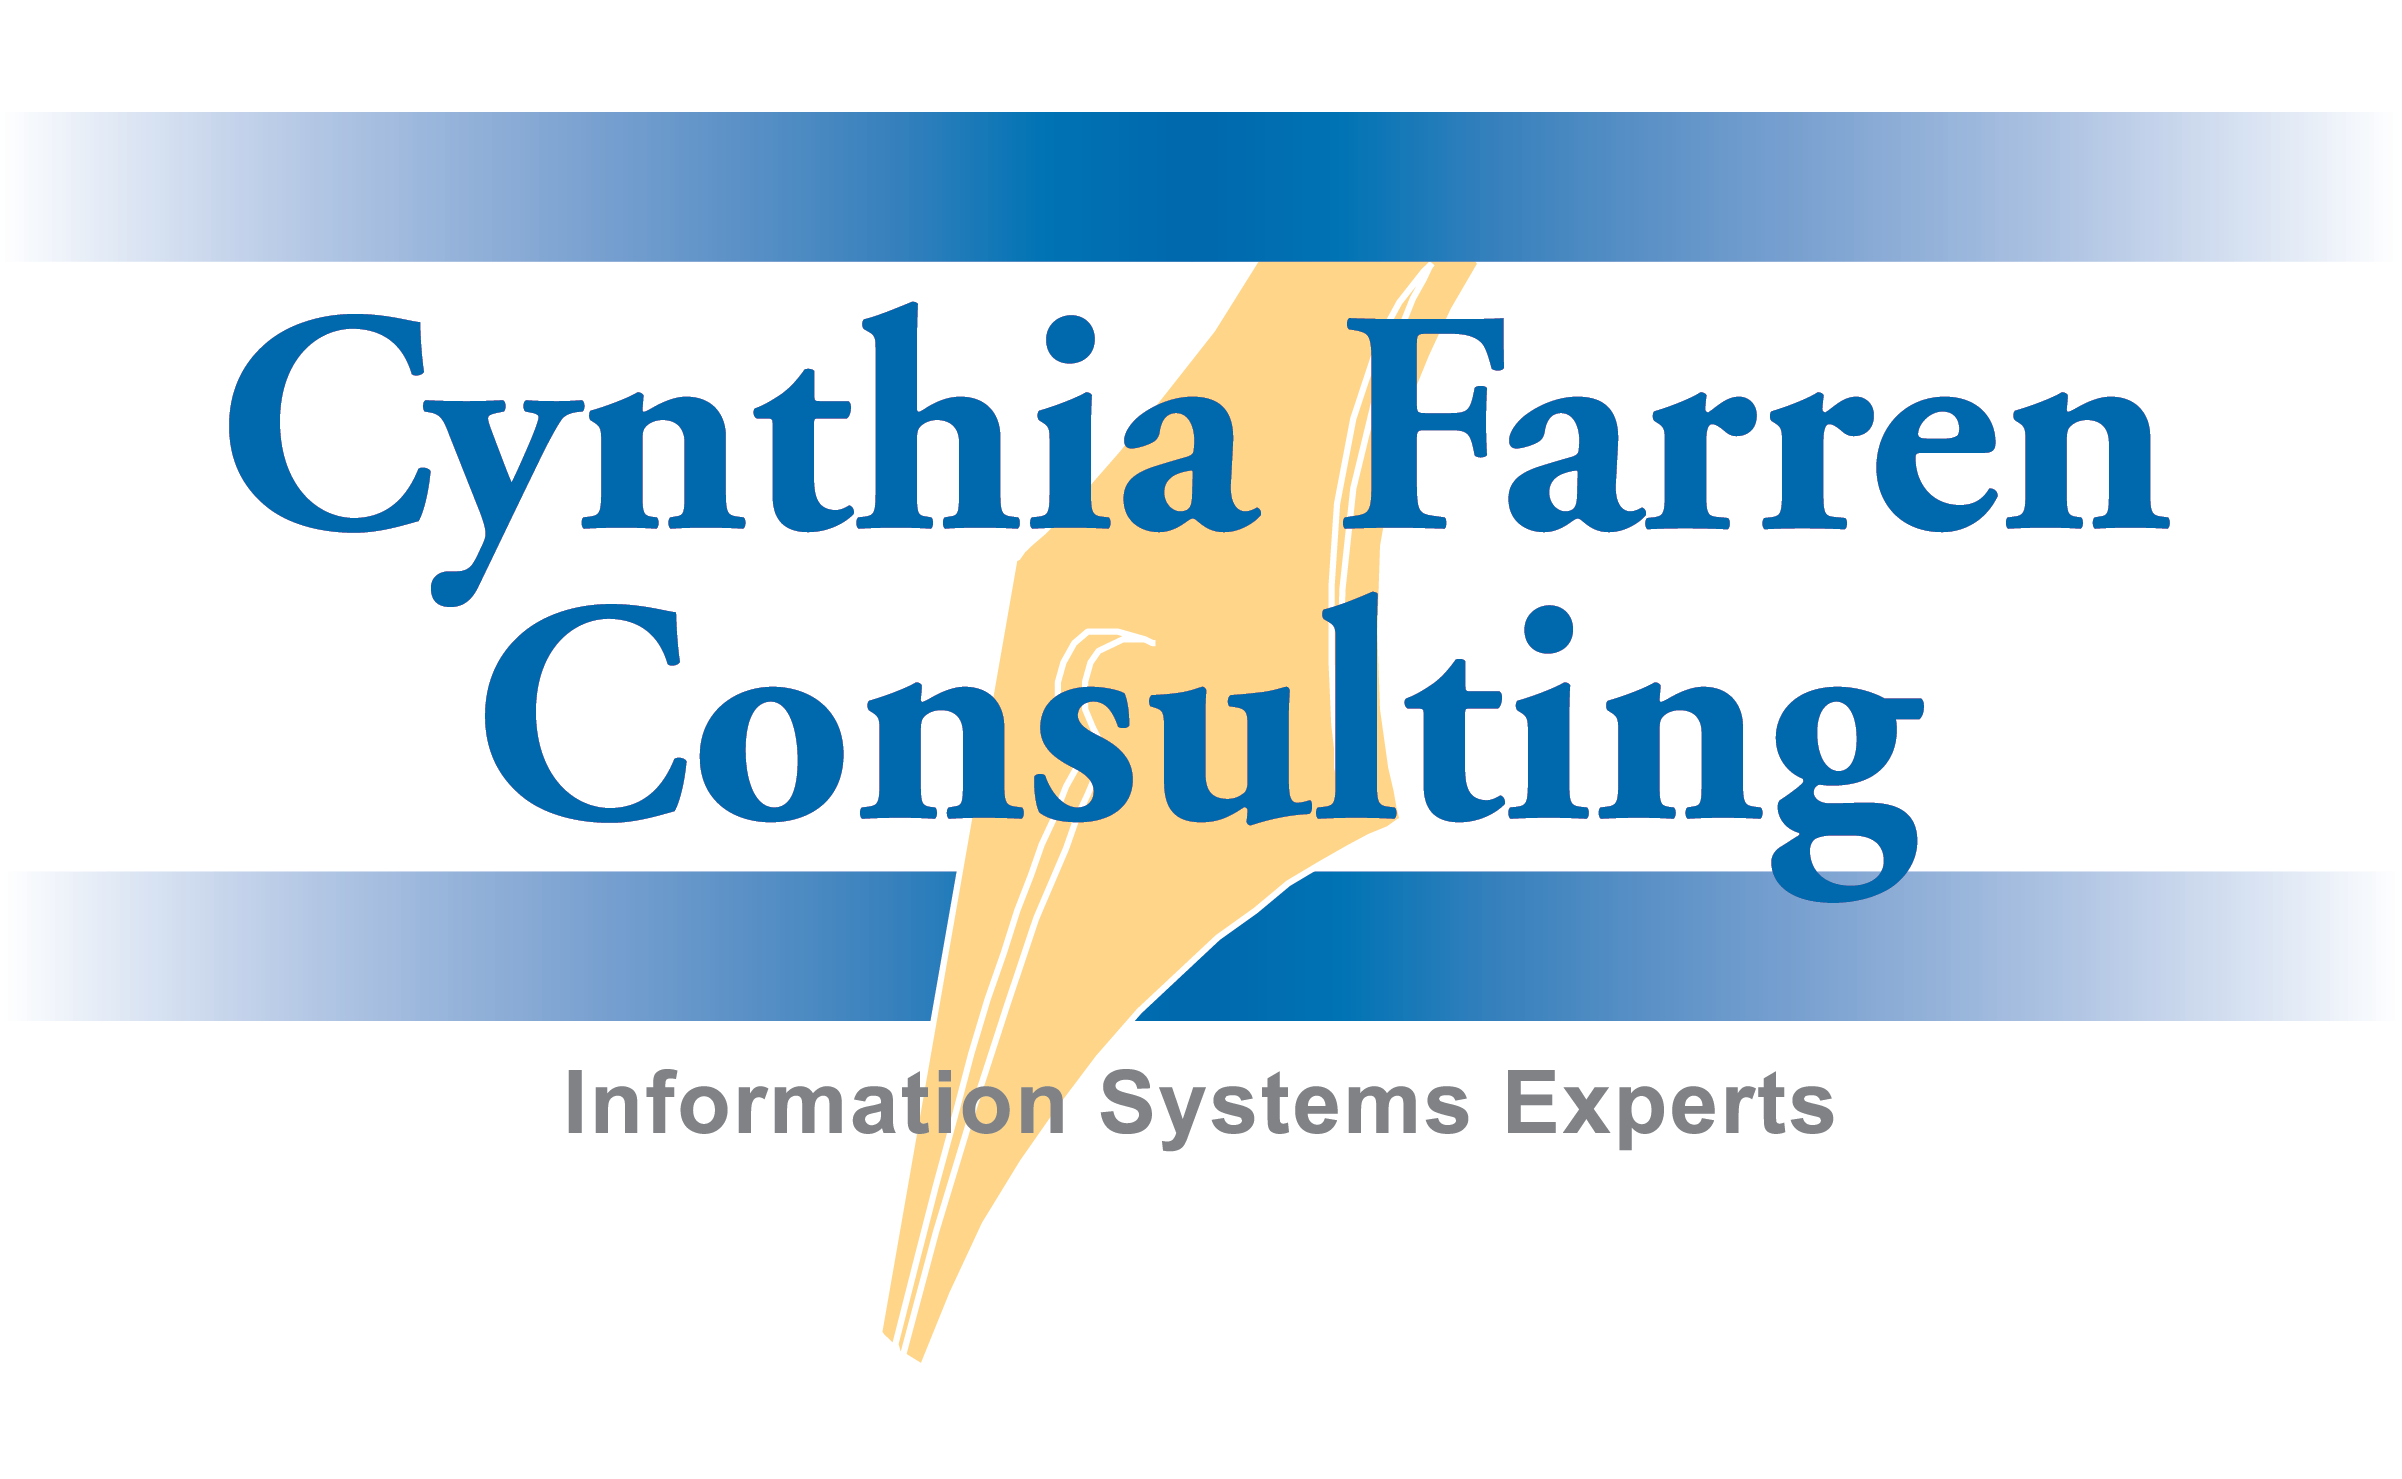 Cynthia Farren Consulting Logo